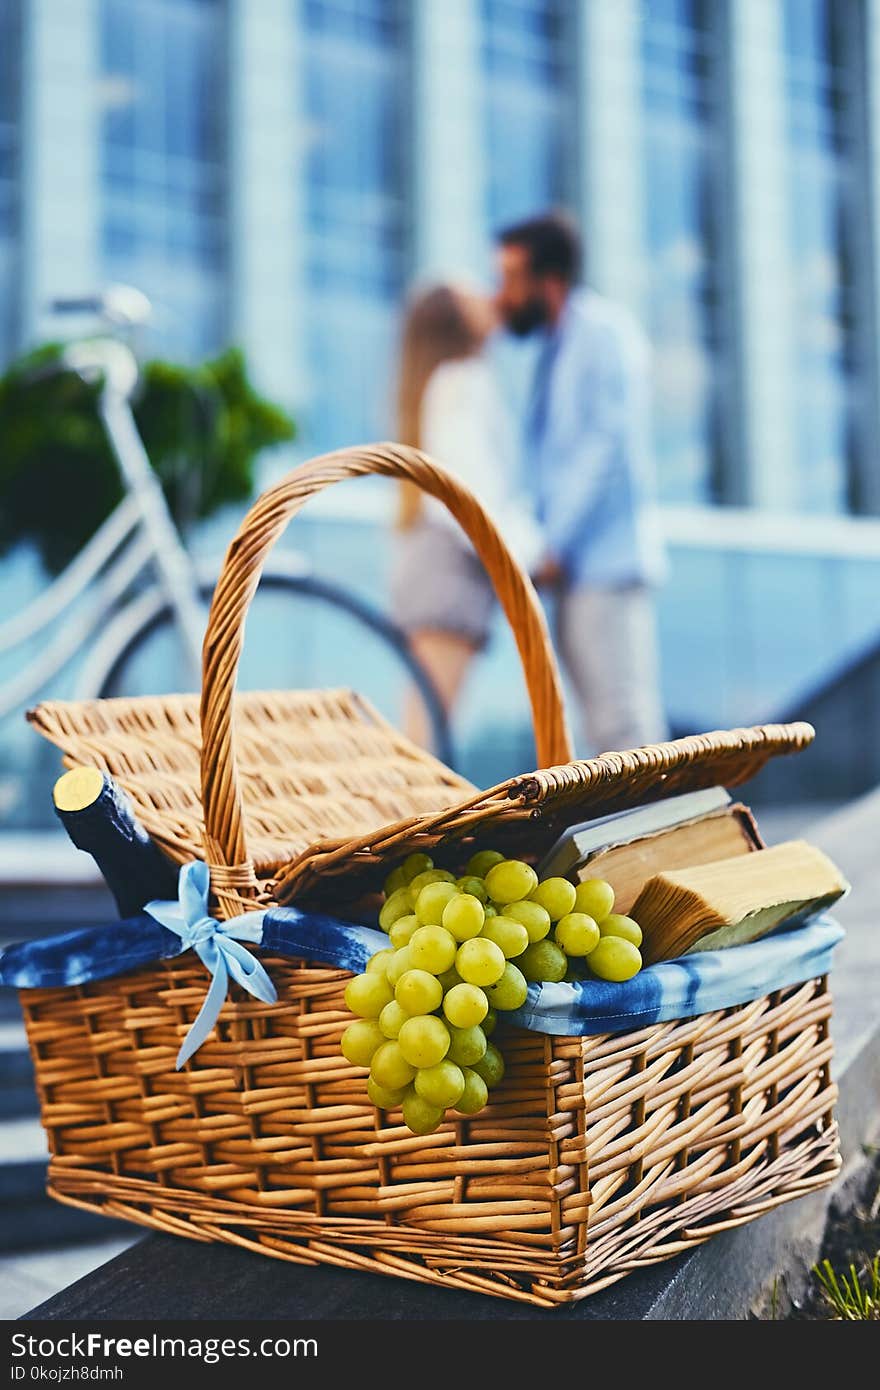 Close up image of picnic basket full of fruits, bread and wine. Close up image of picnic basket full of fruits, bread and wine.